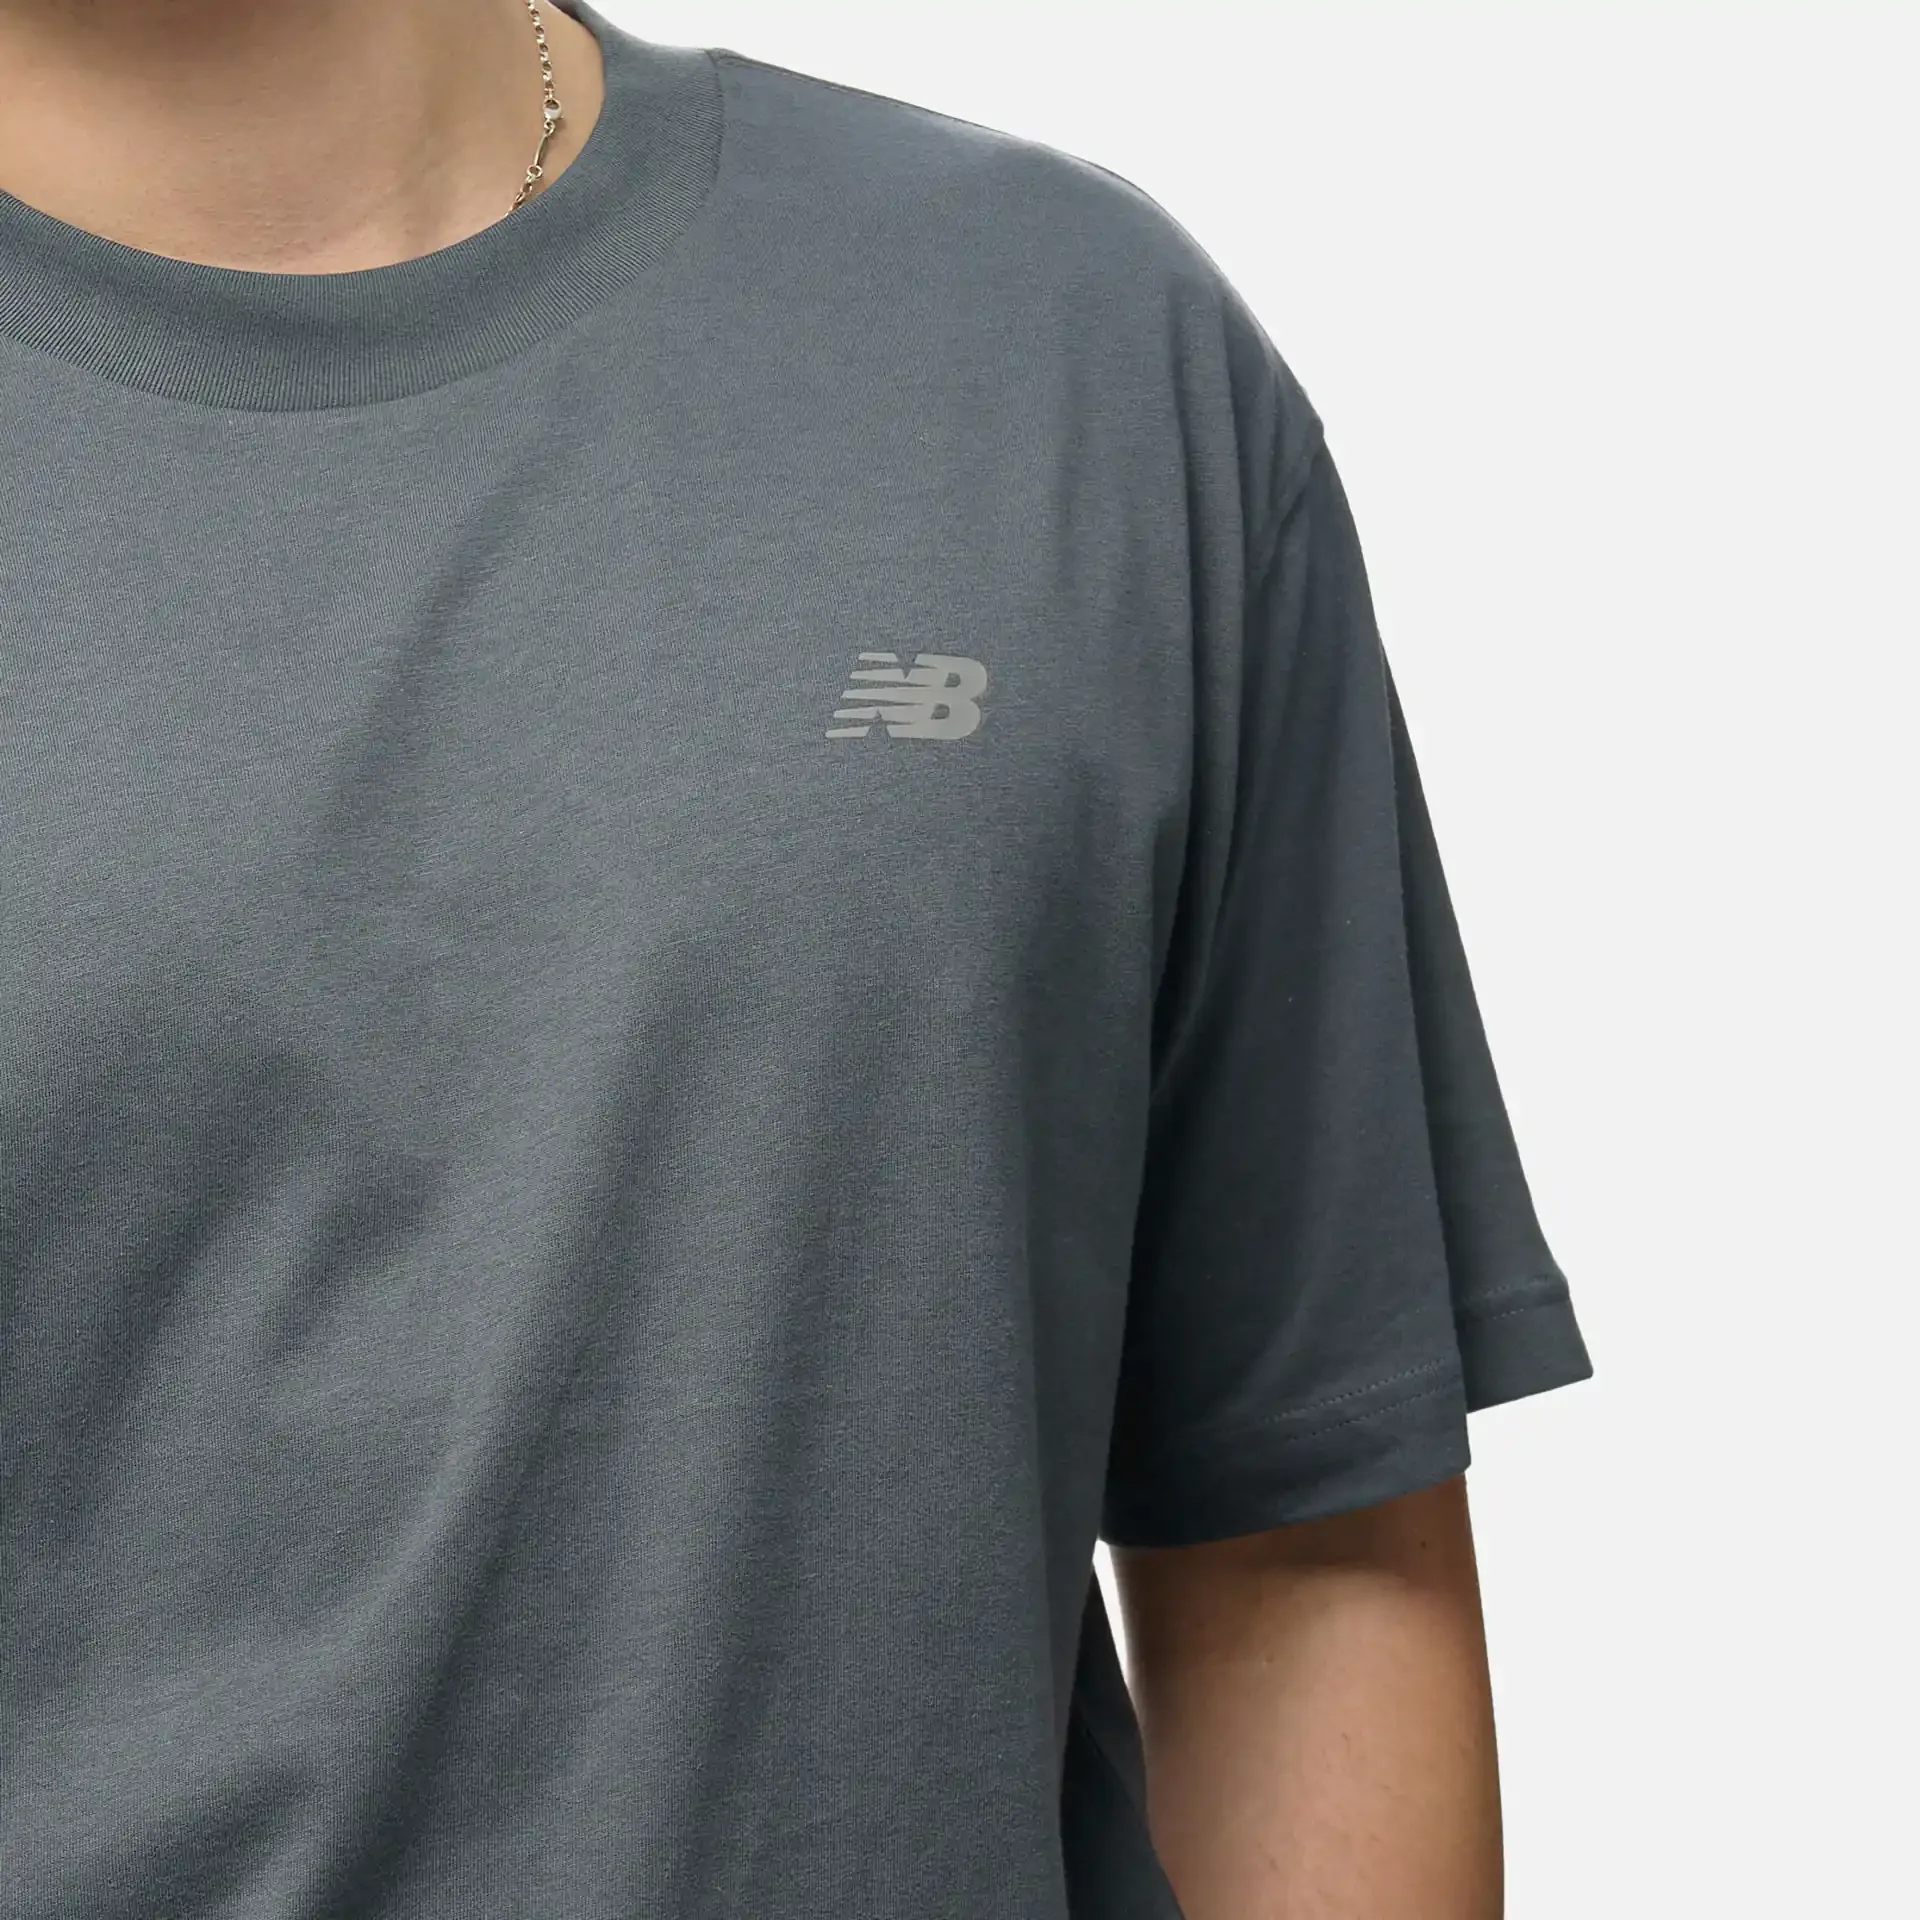 New Balance Relaxed Logo T-Shirt Graphite